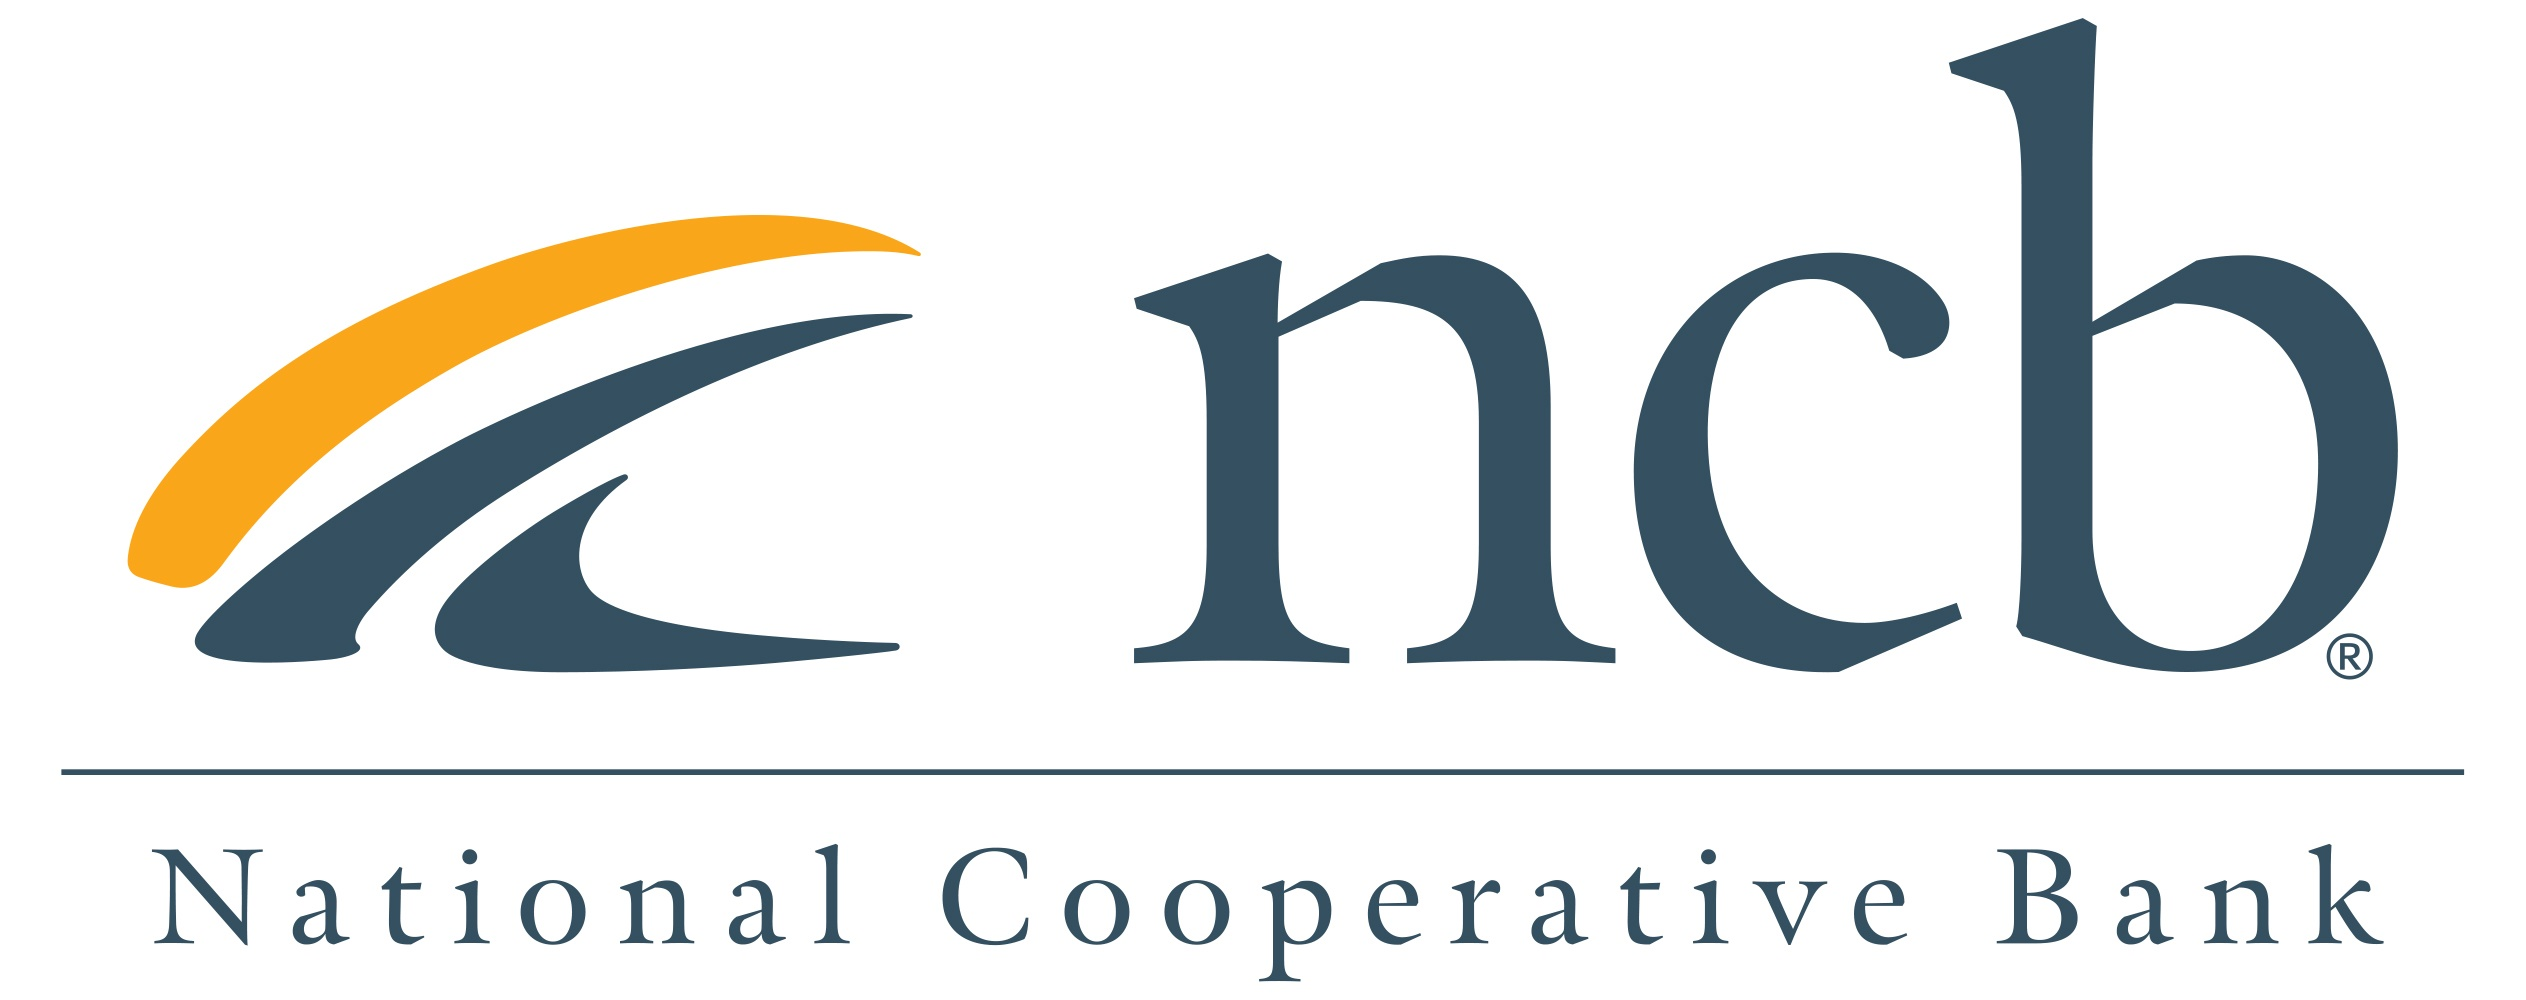 National Cooperative Bank, N.A. Company Logo